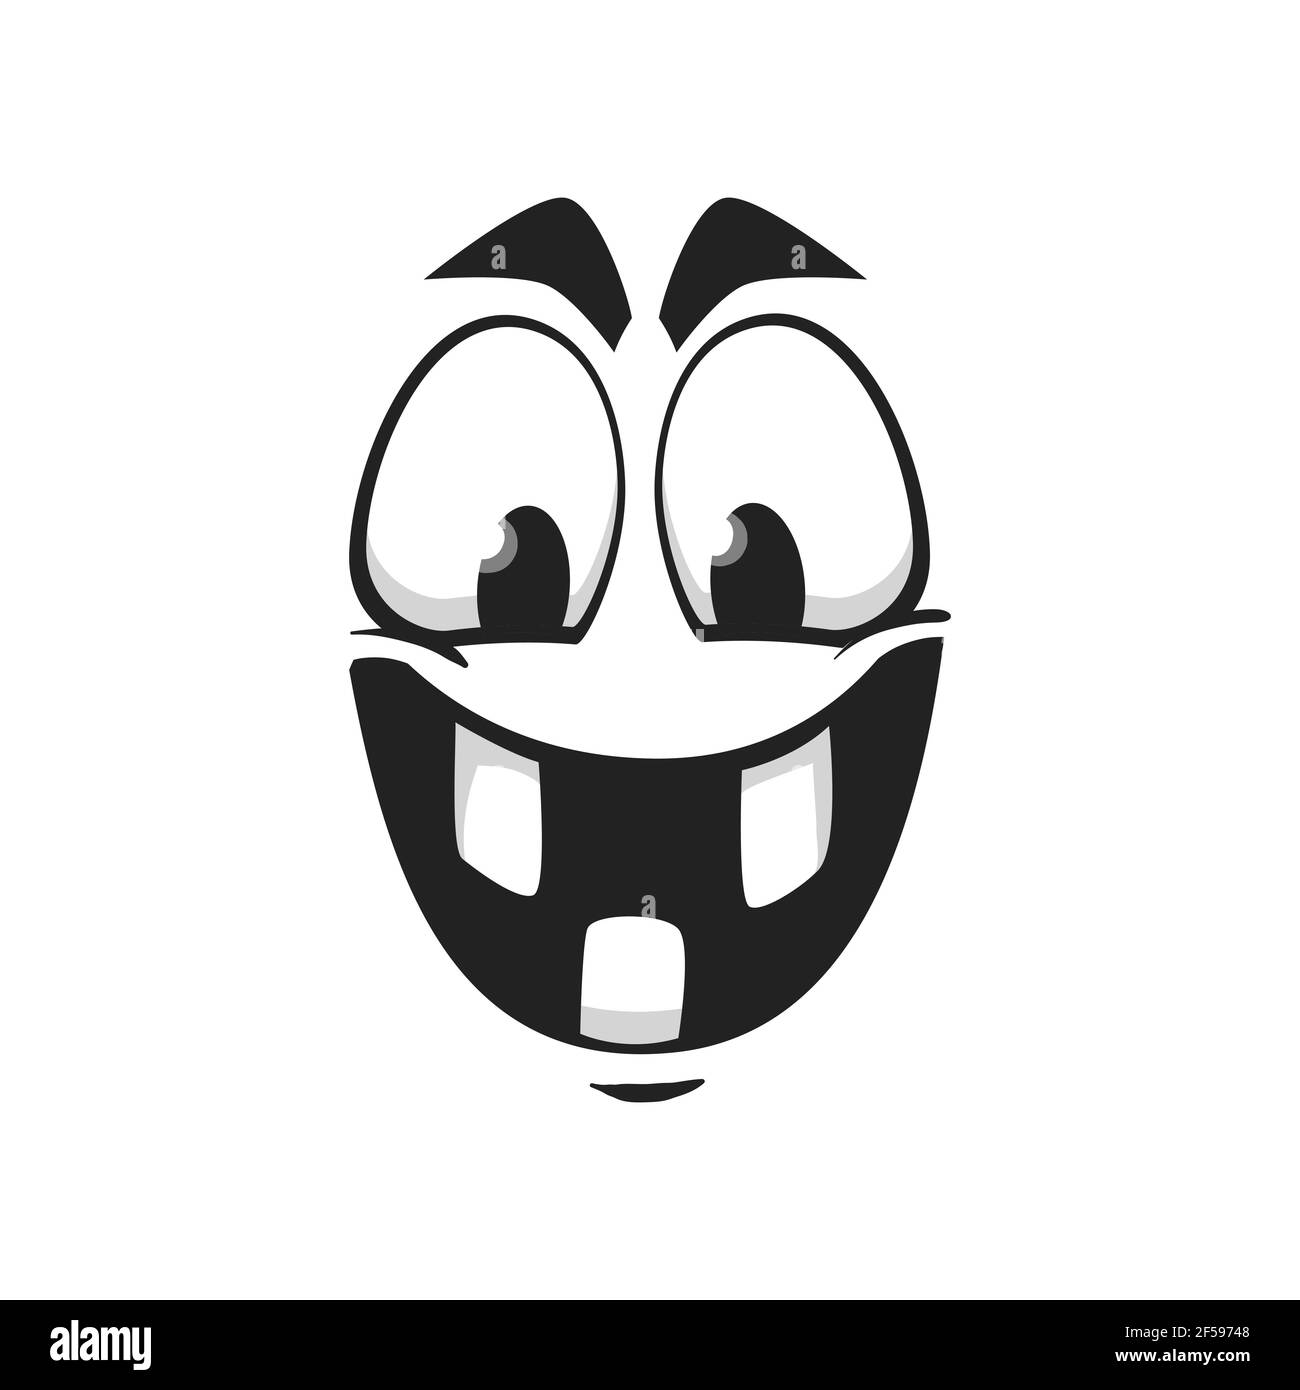 laughing face emoji black and white